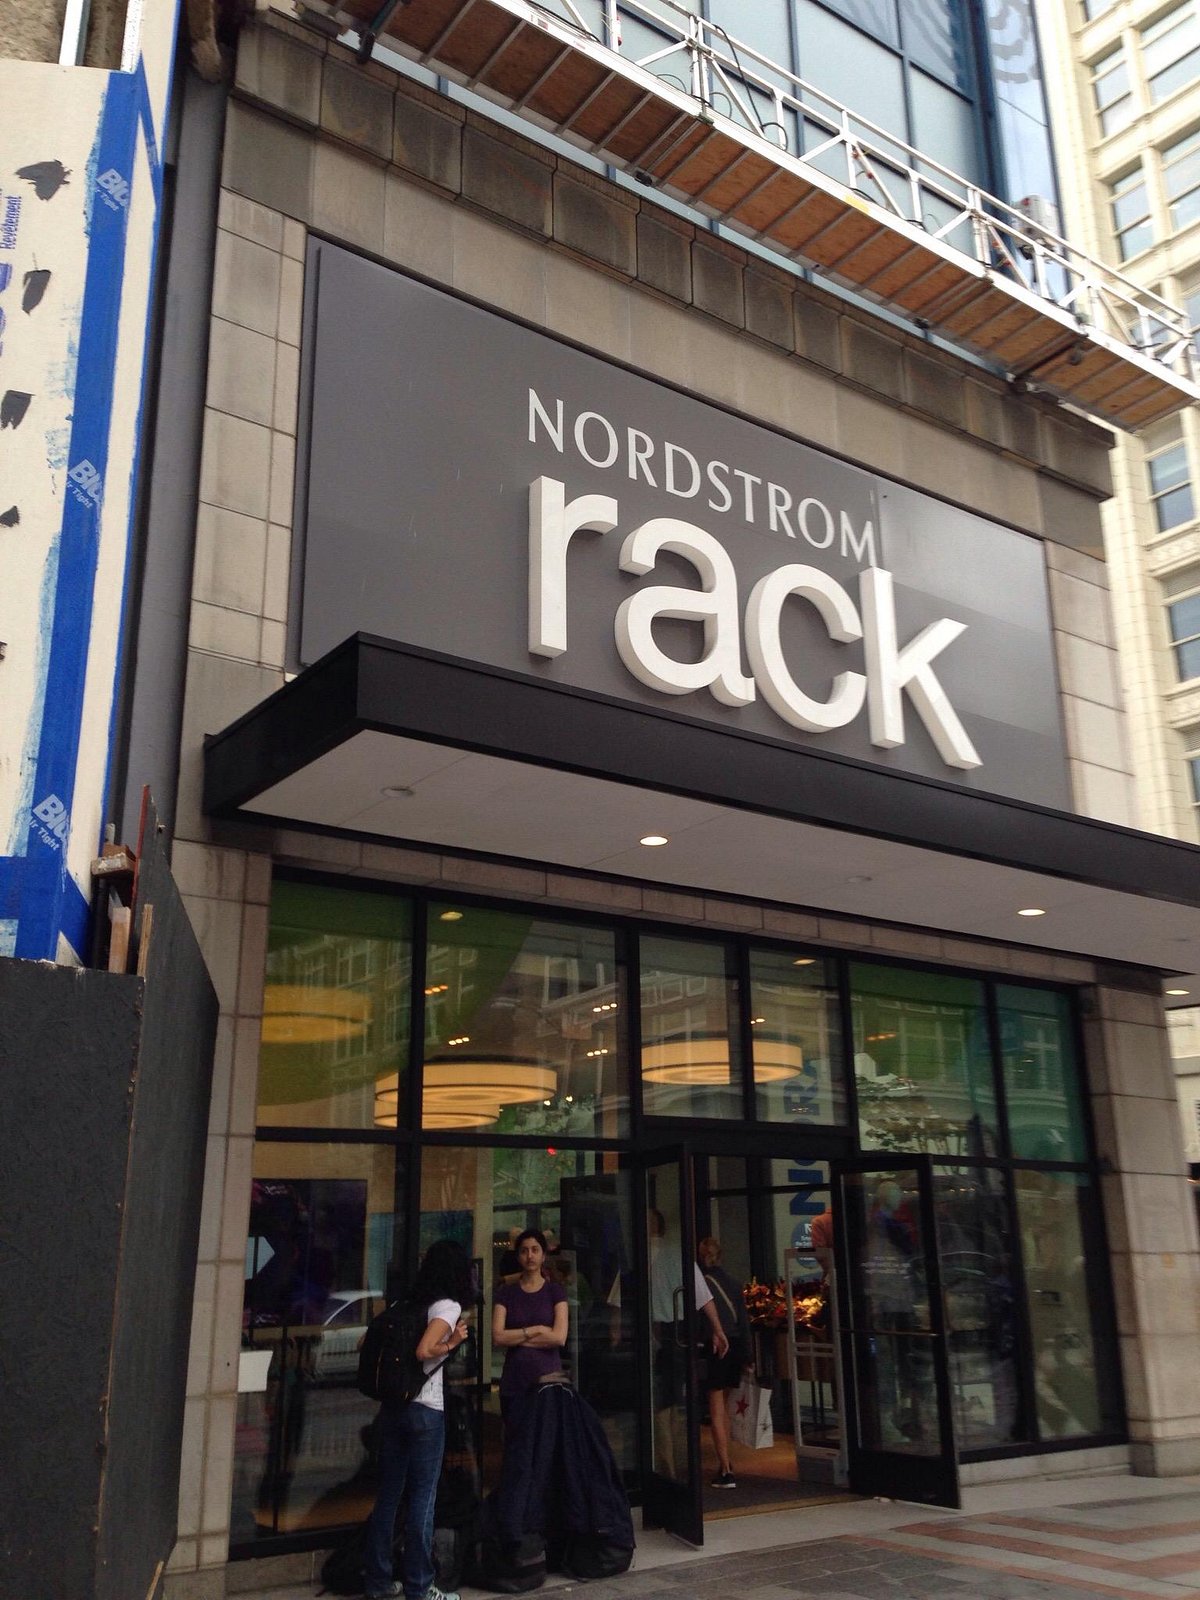 New Nordstrom Rack coming to Salem